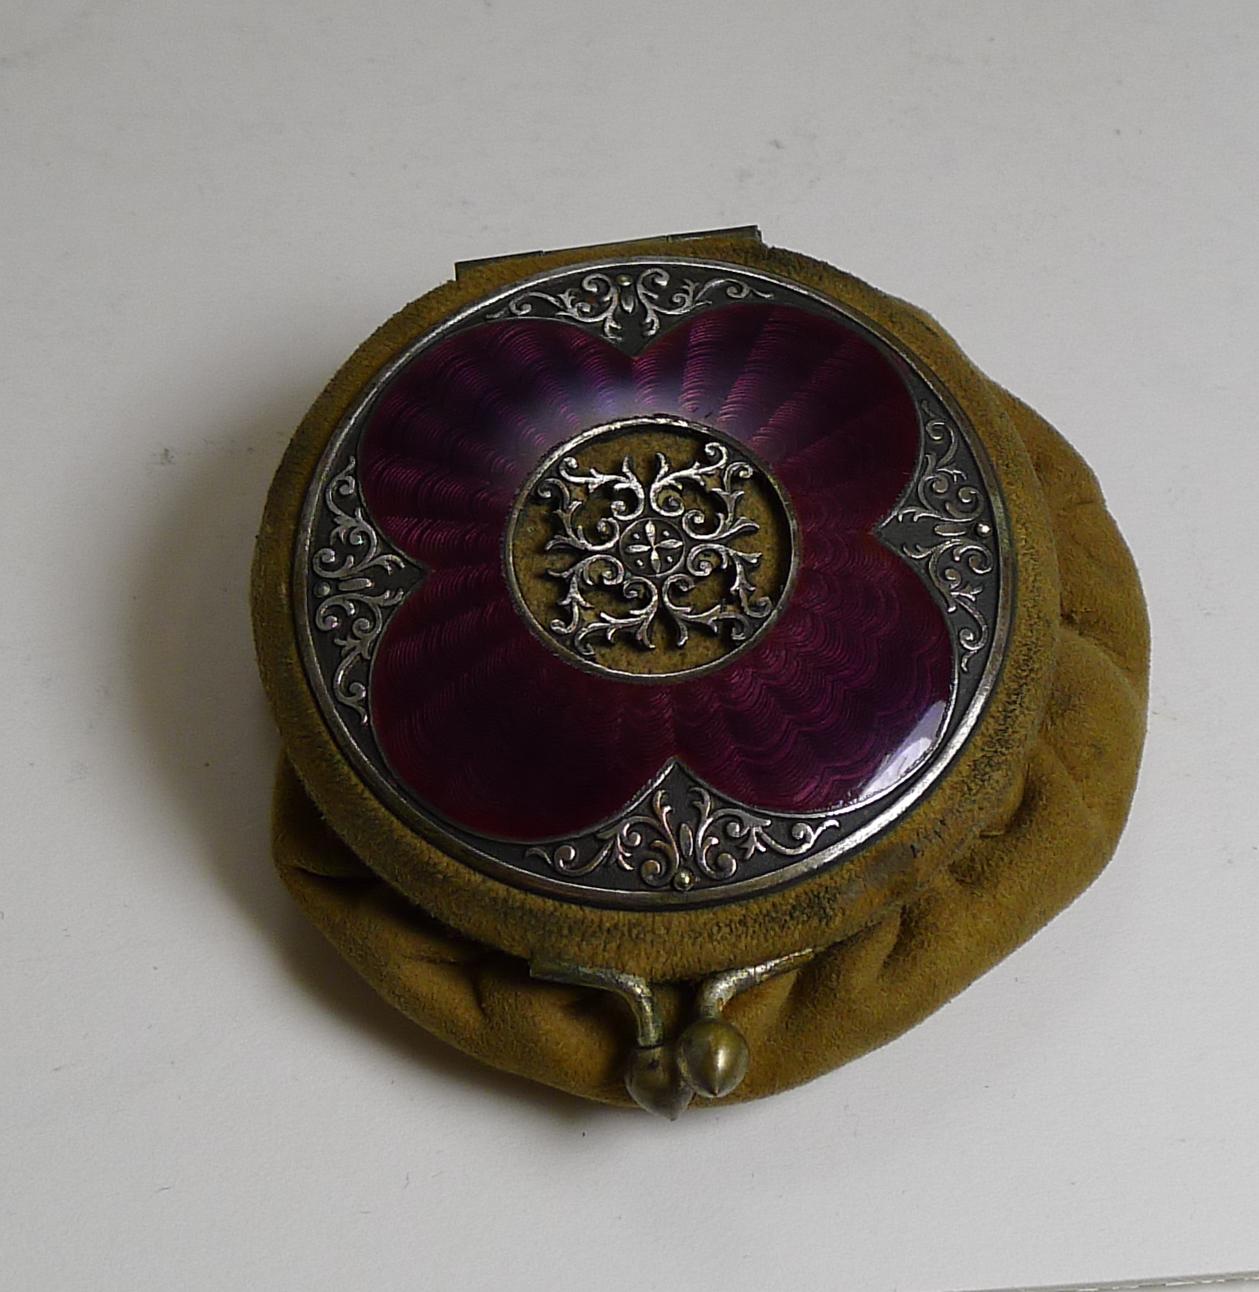 Edwardian Antique English Coin Purse, Stunning Purple Guilloche Enamel